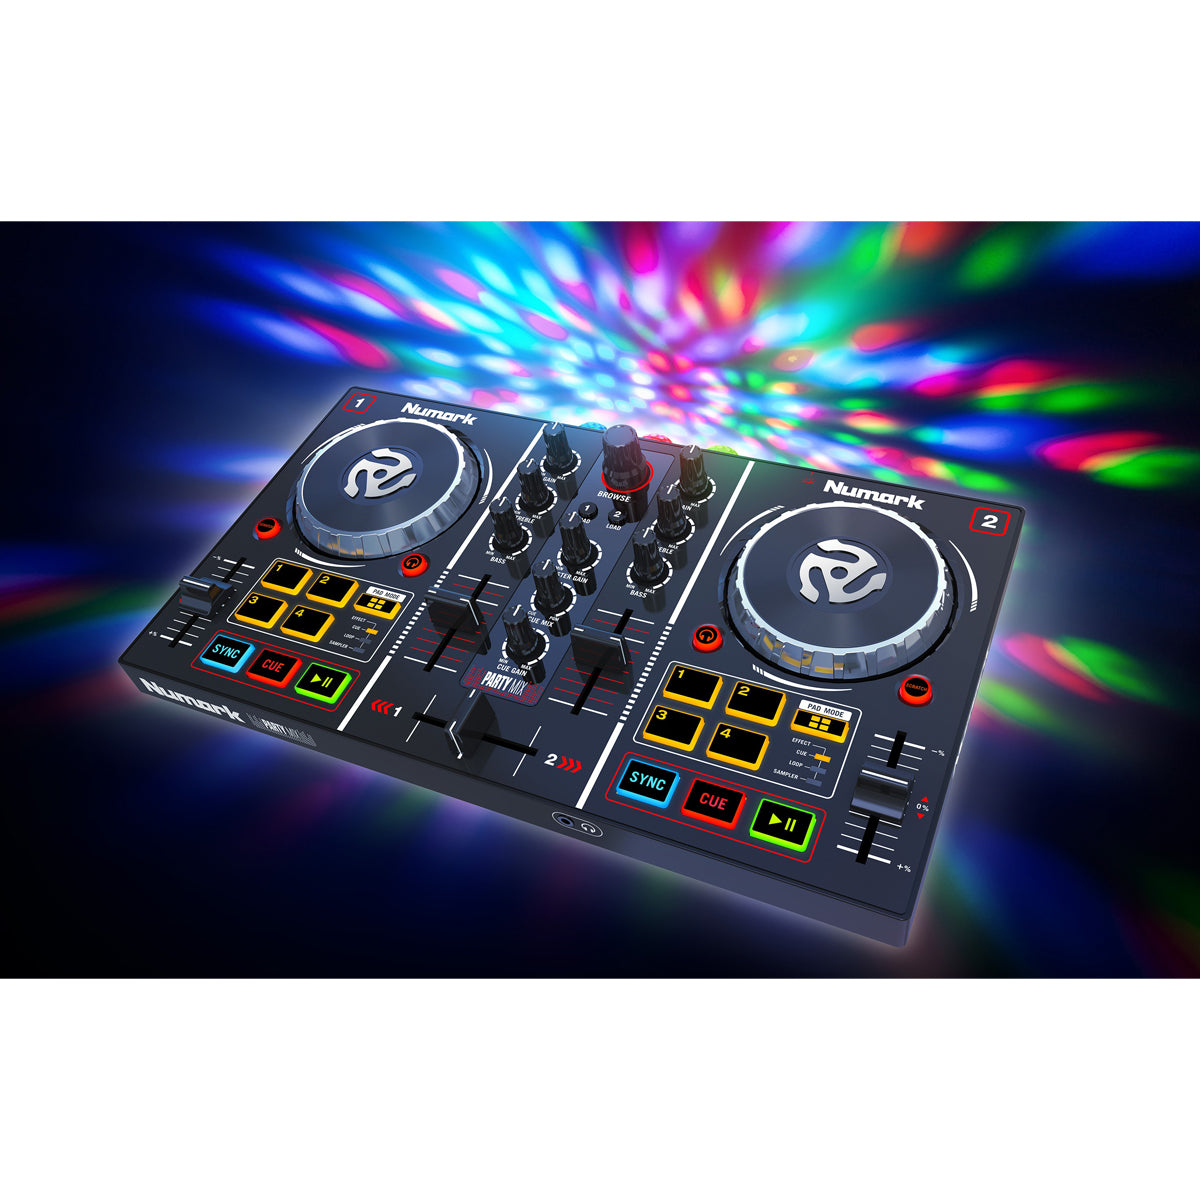 Numark Partymix 2 DJ Controller - Việt Music